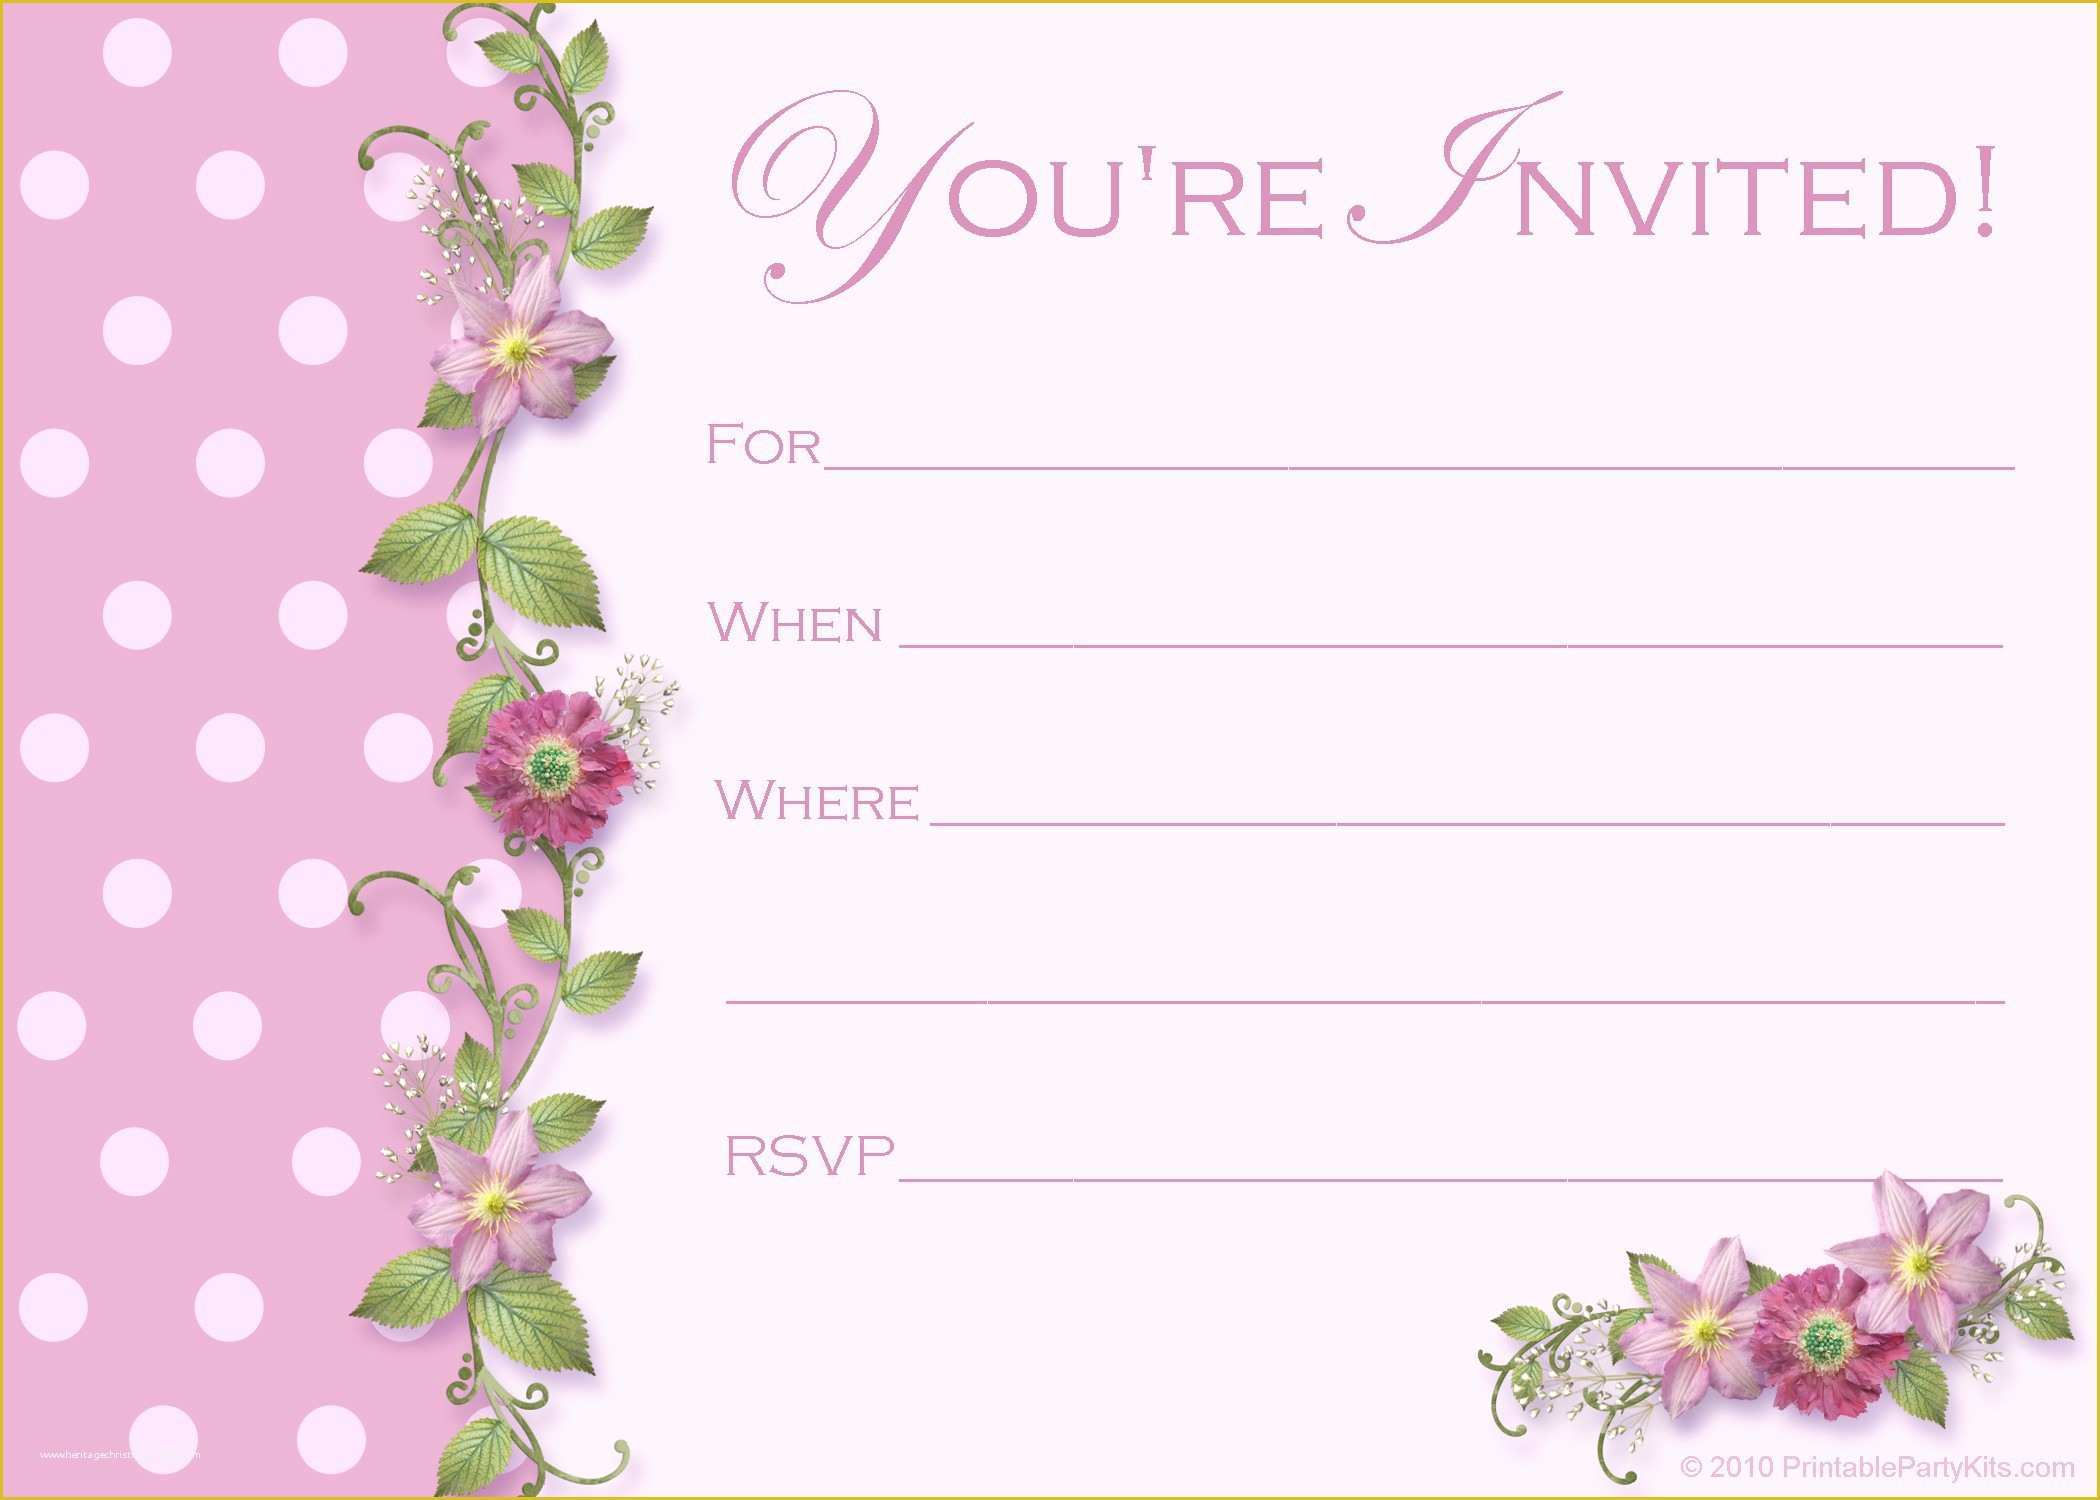 Girl Birthday Invitations Templates Free Of Free Printable Party Invitations Templates